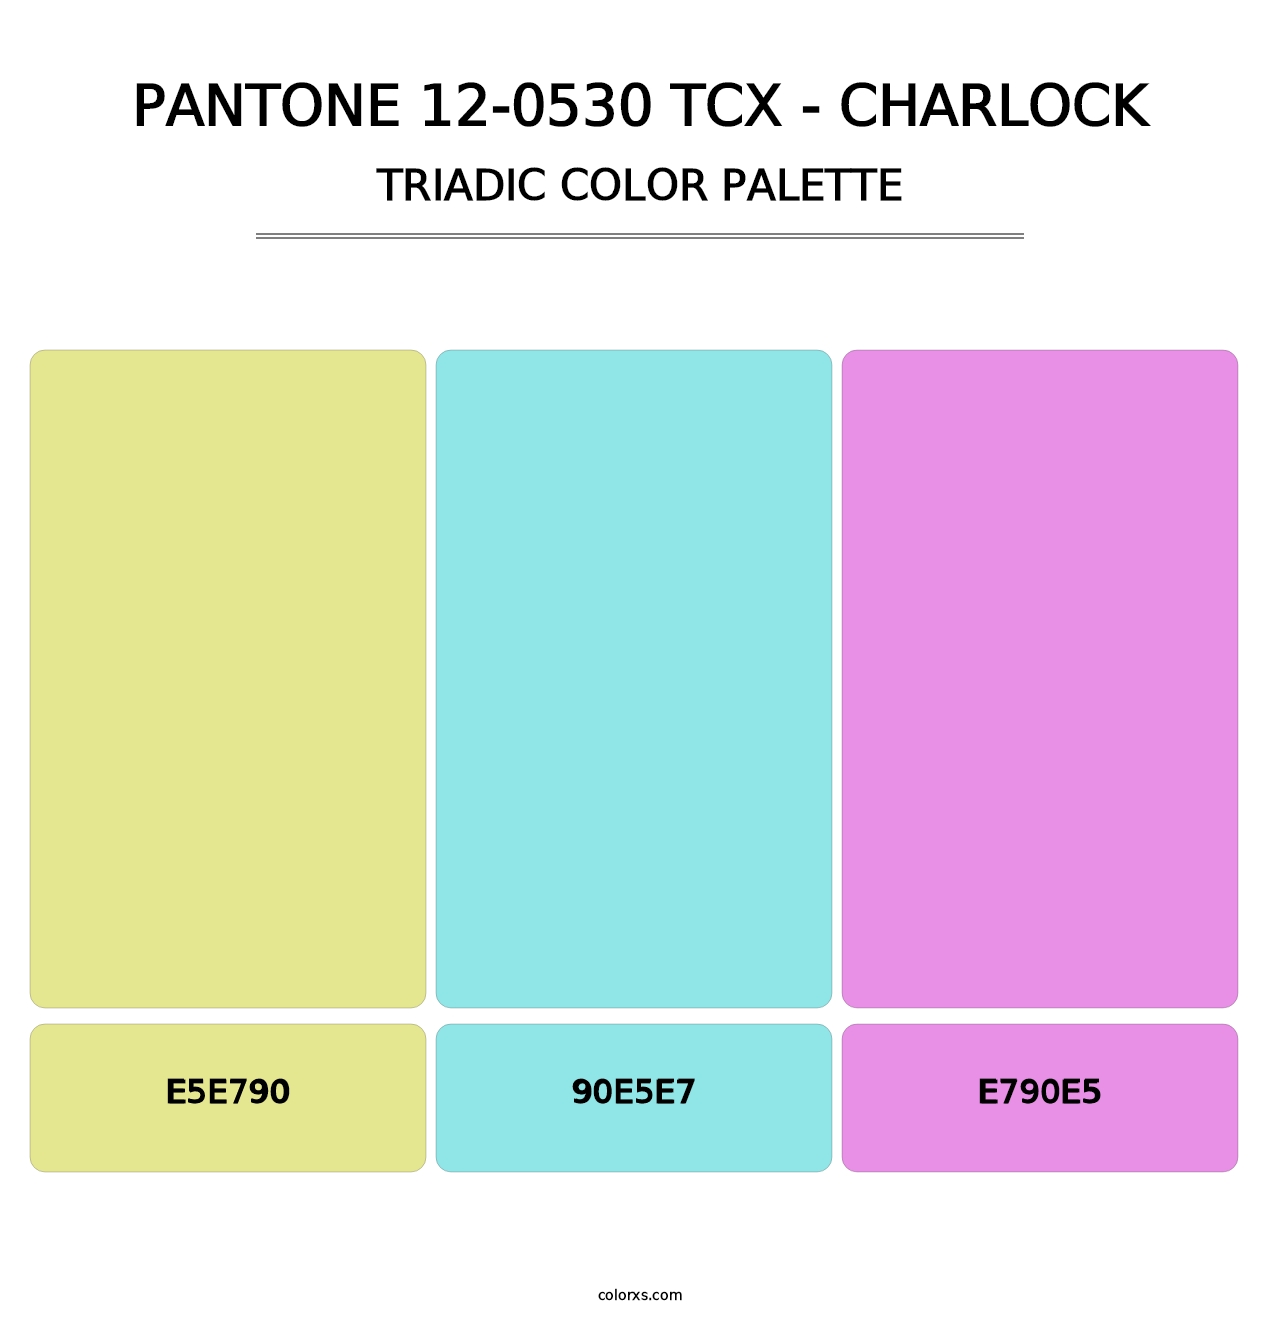 PANTONE 12-0530 TCX - Charlock - Triadic Color Palette